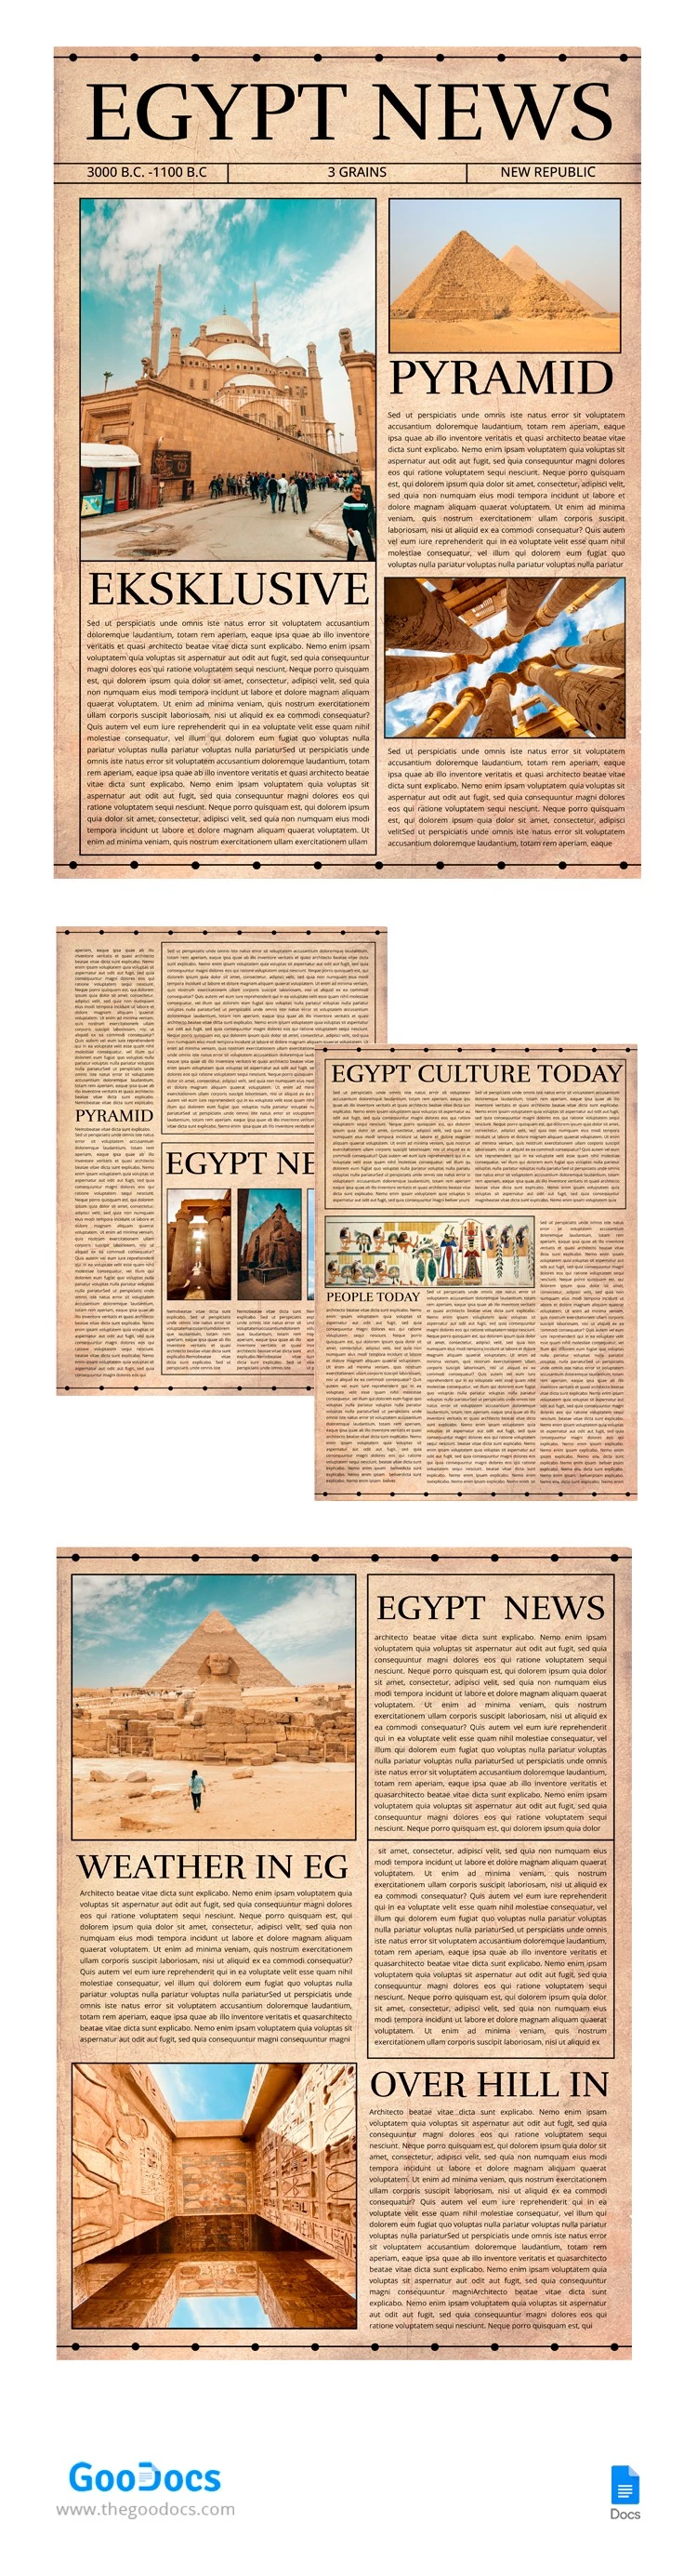 Journal égyptien - free Google Docs Template - 10065740